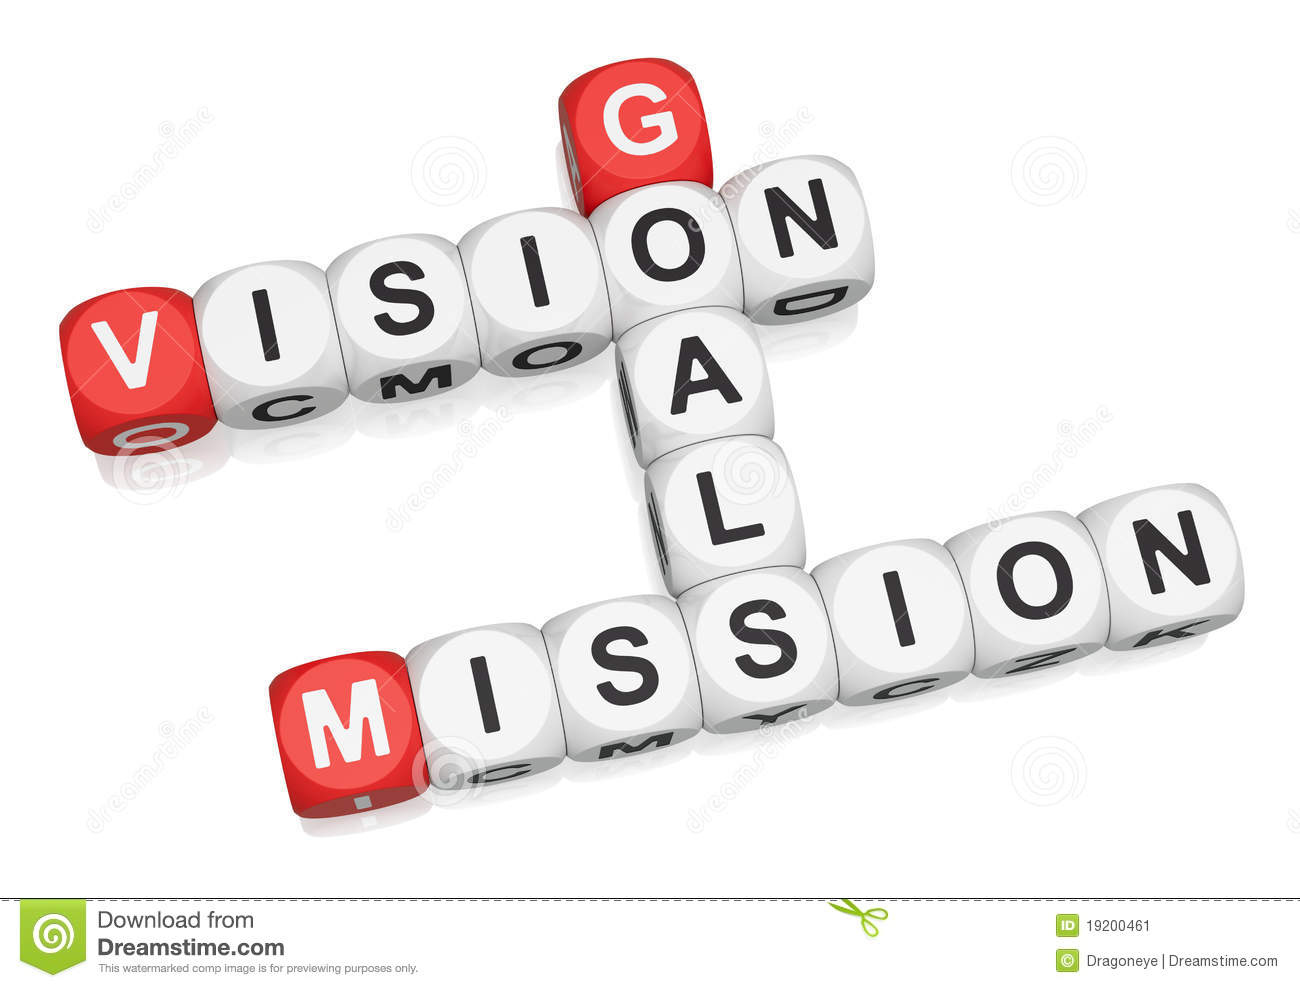 Vision Statement Clipart Vision Mission Goals 19200461 Jpg